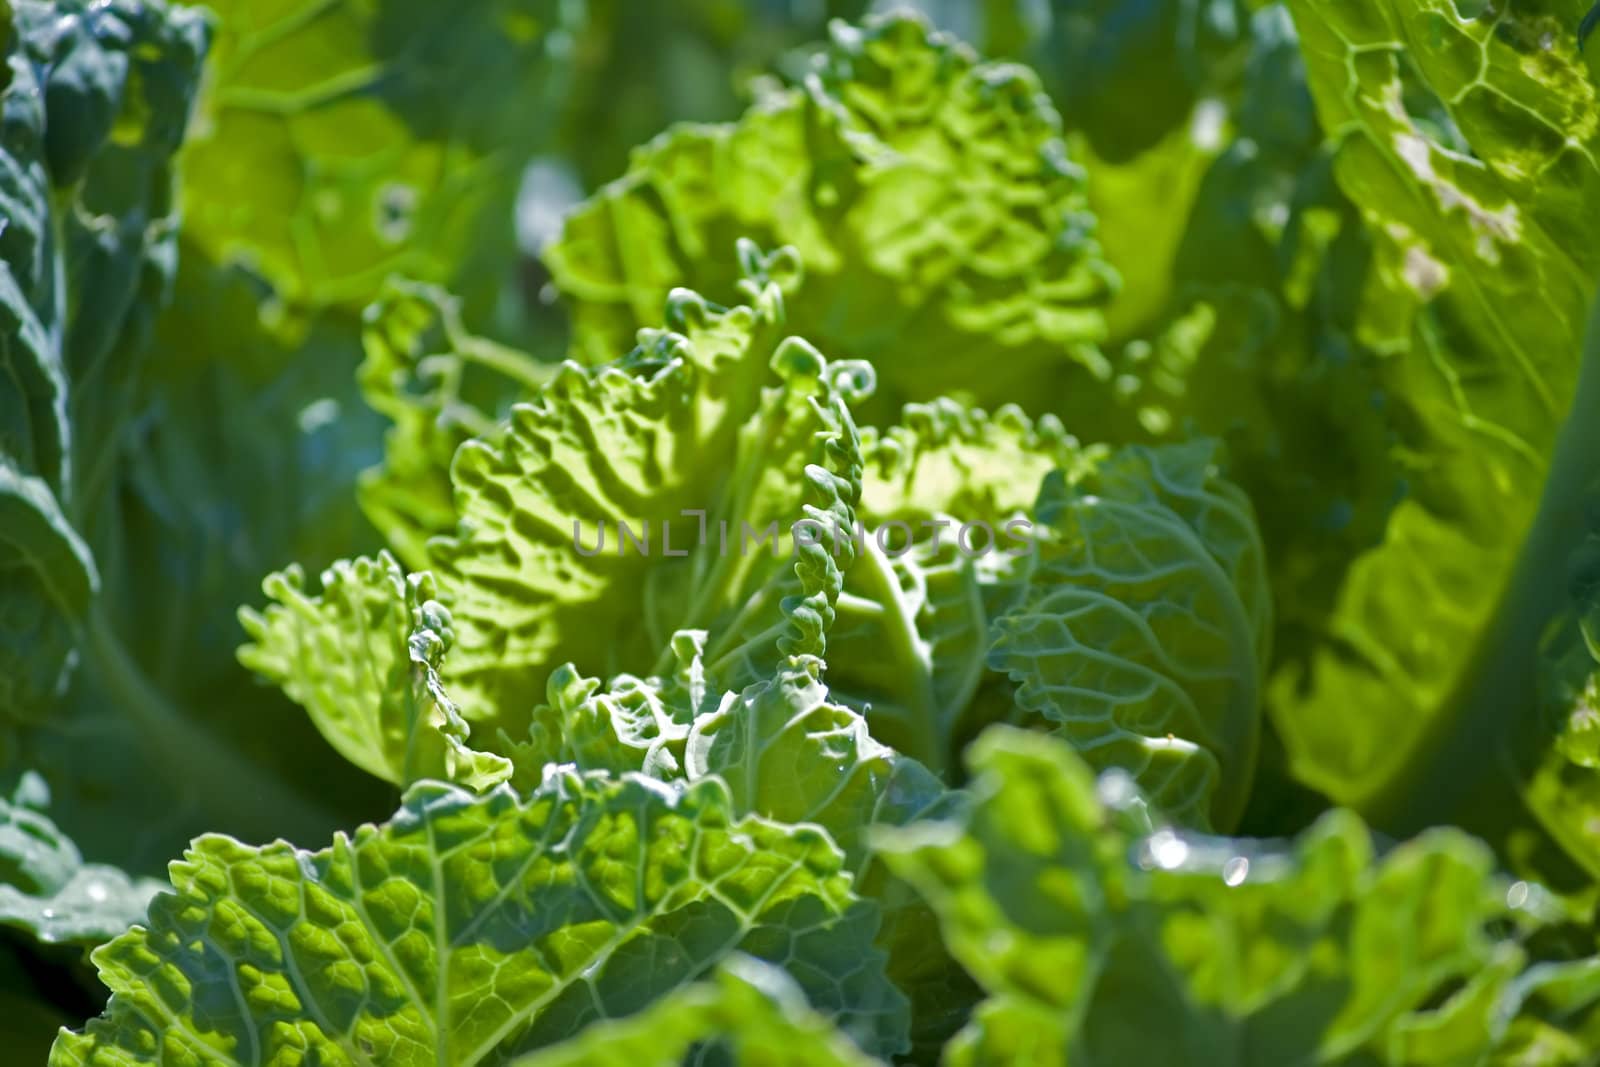 close-up of fresh savoy cabbage